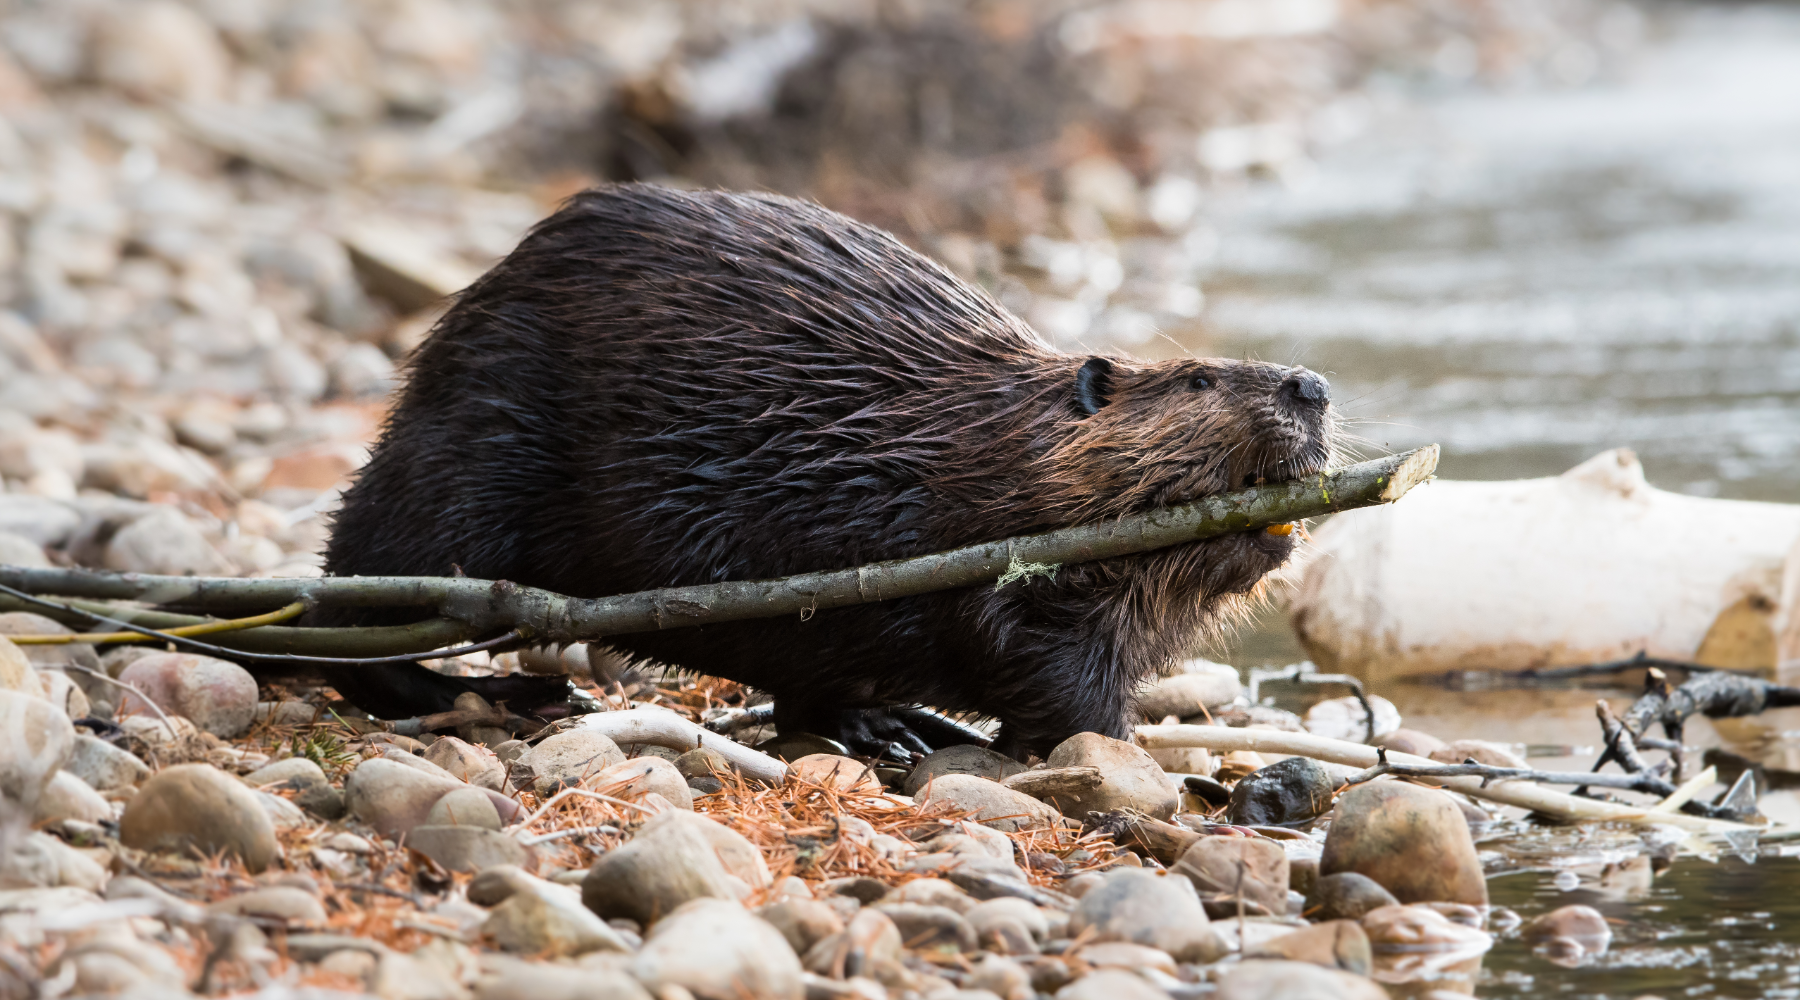 Ecosystem engineer - beaver building a dam